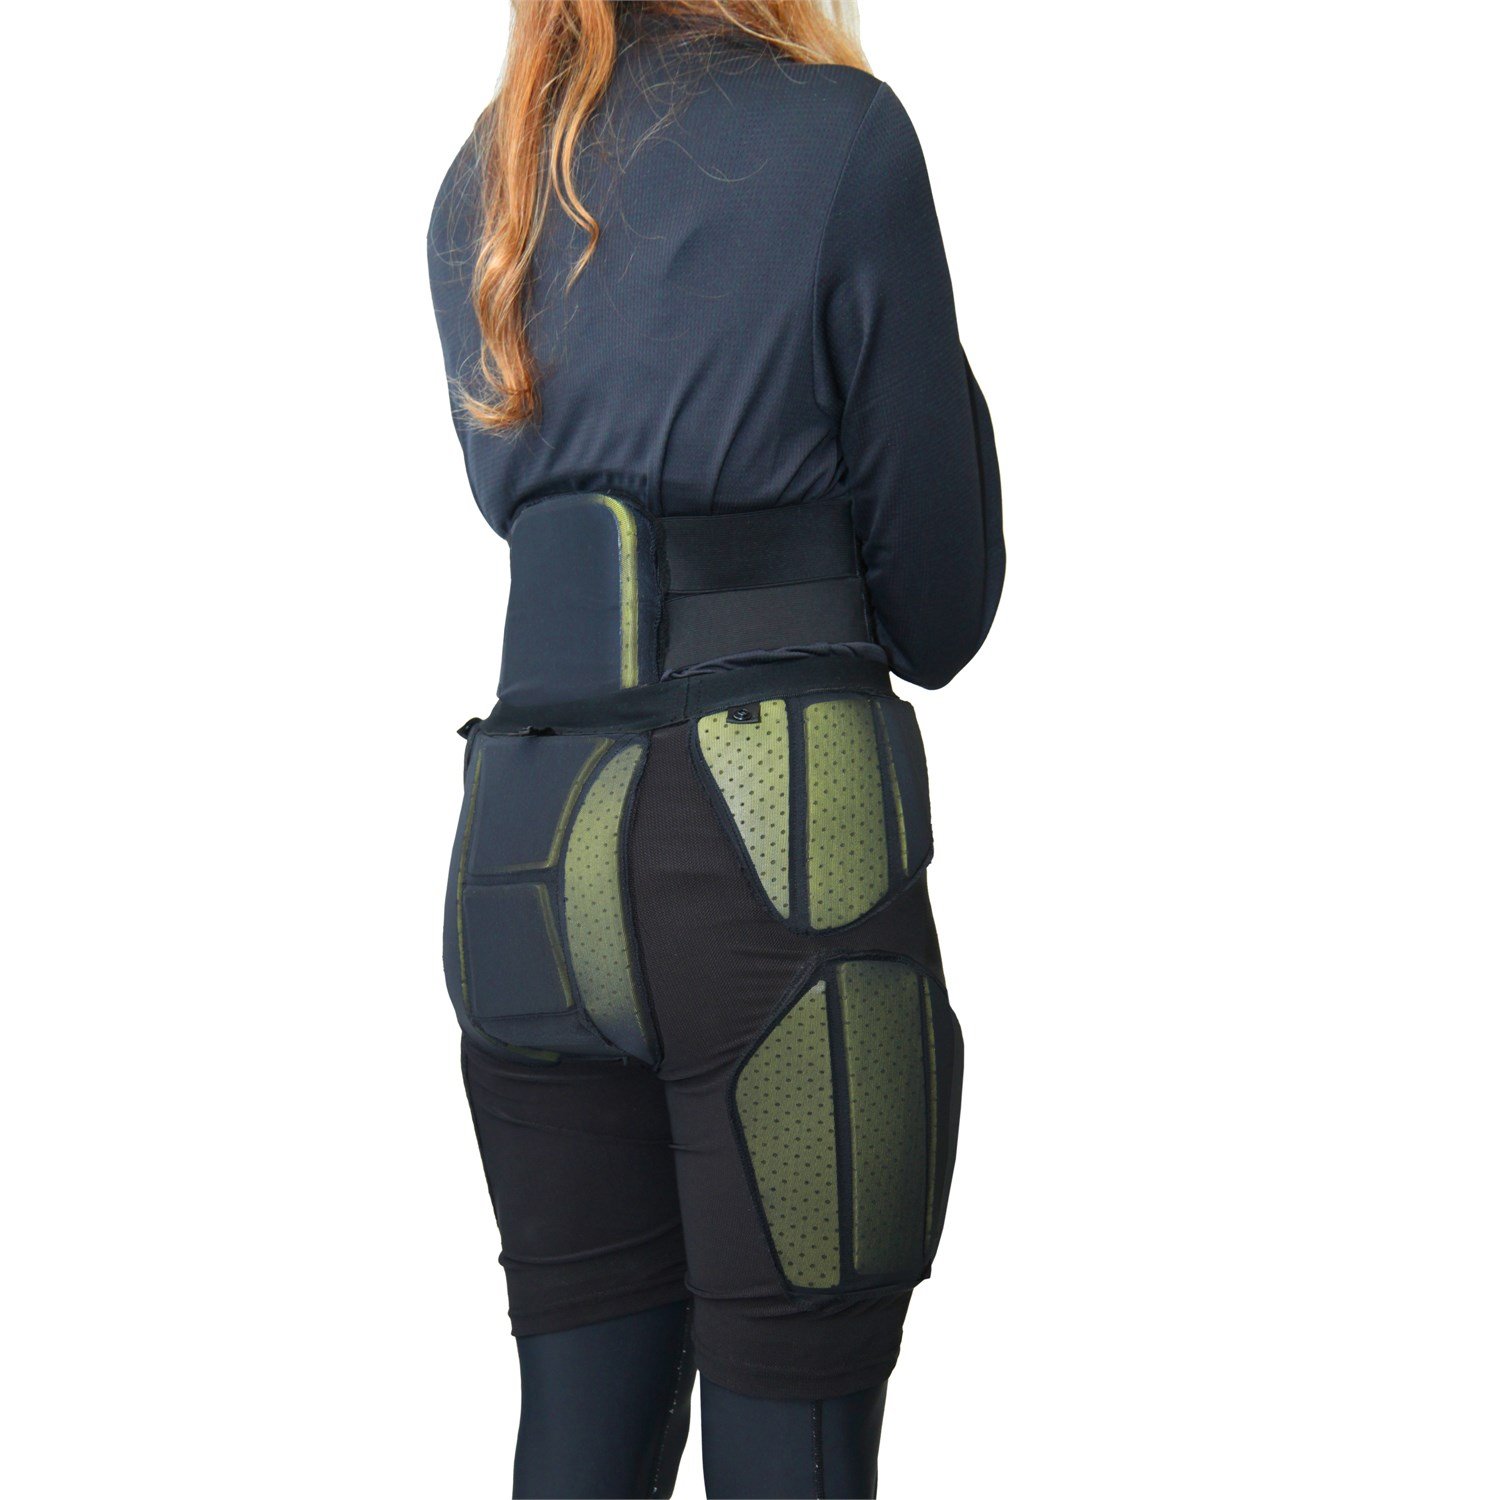 Bern Low-Pro Hip/Tailbone Protector Body Armor - Women's